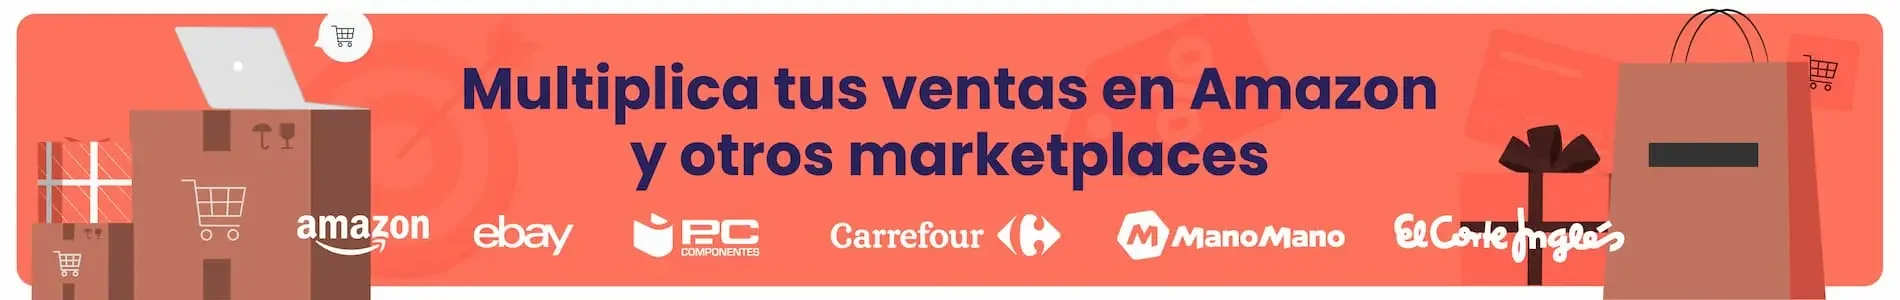 Agencia Marketplaces - Dobuss